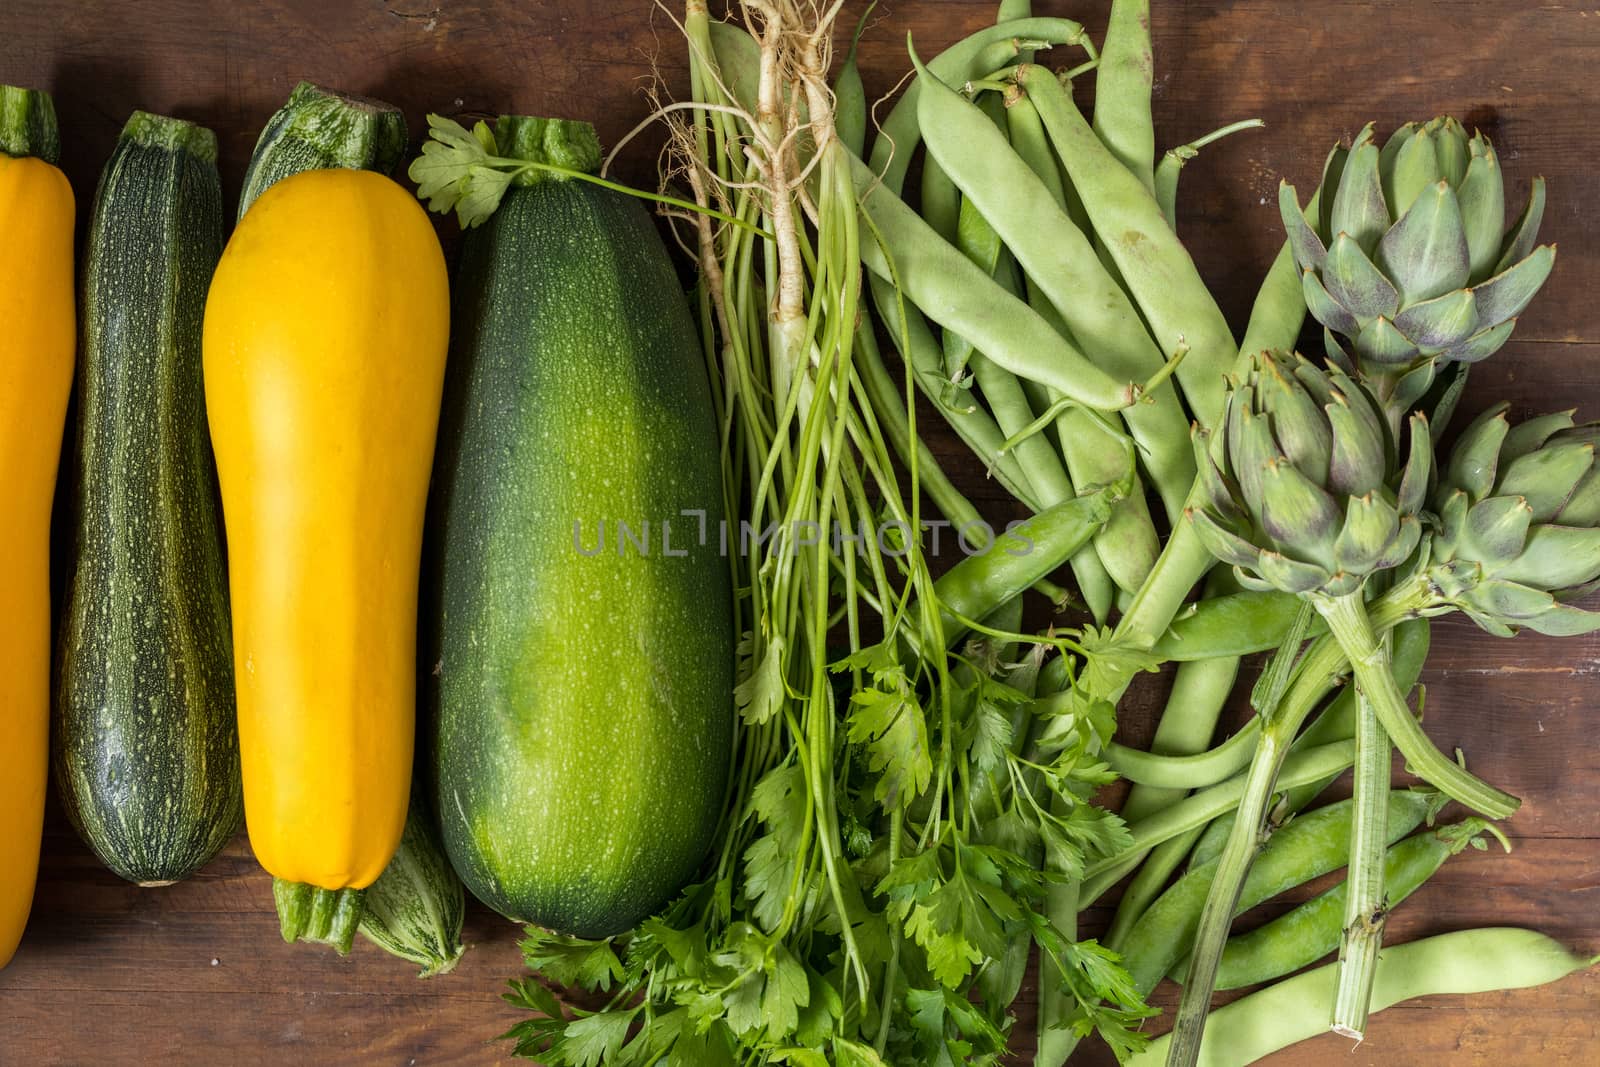 Fresh organic green vegetables on wooden floor  by ArtSvitlyna